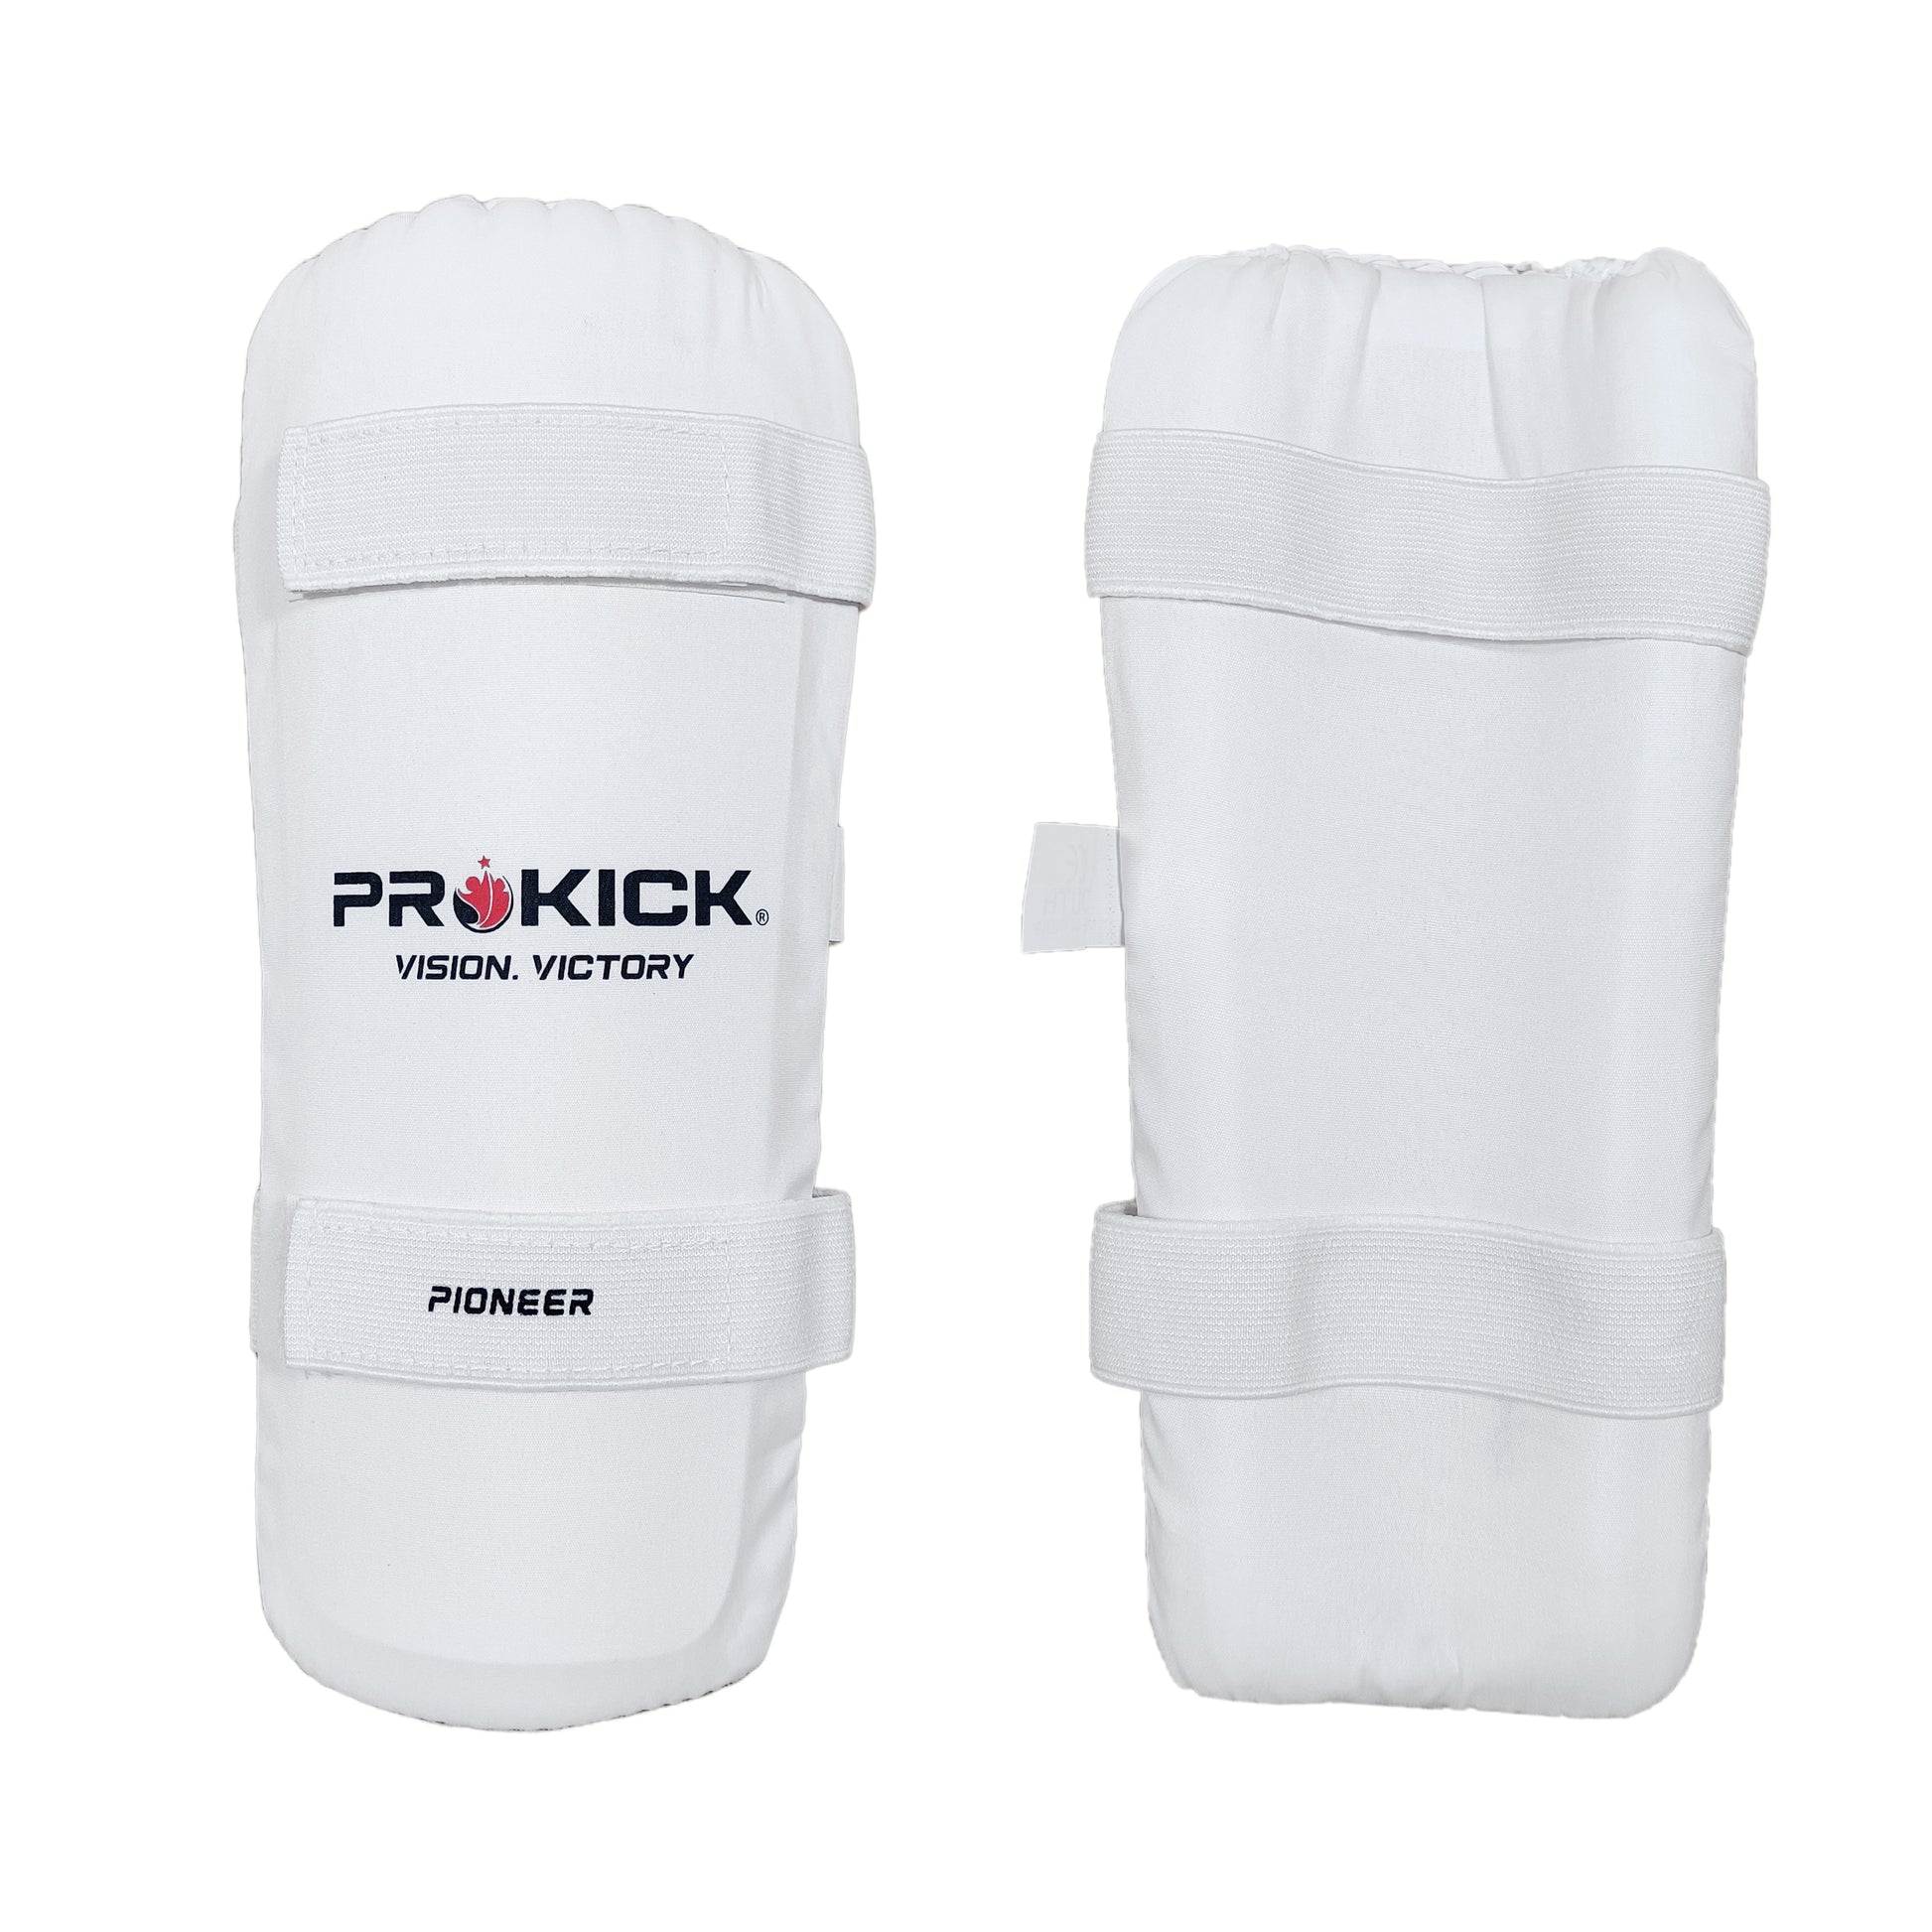 Prokick Pioneer Cricket Arm Guard, White - Best Price online Prokicksports.com